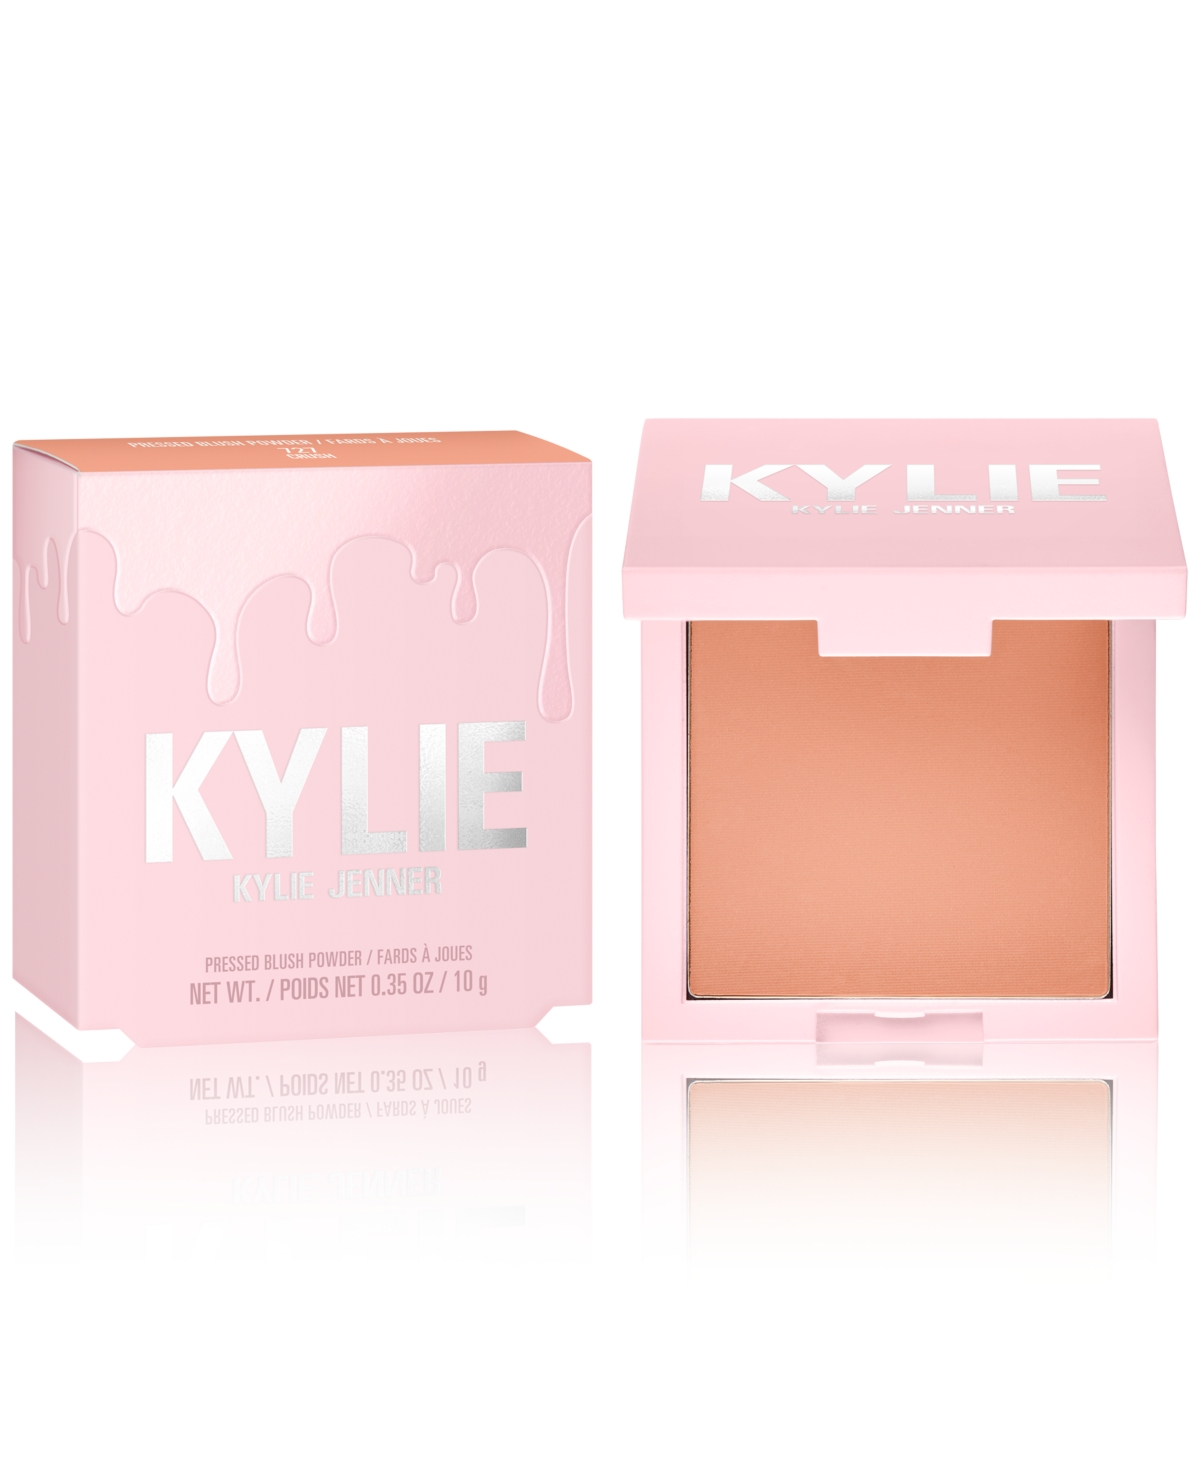 Kylie Cosmetics Pressed Blush Powder In Crush